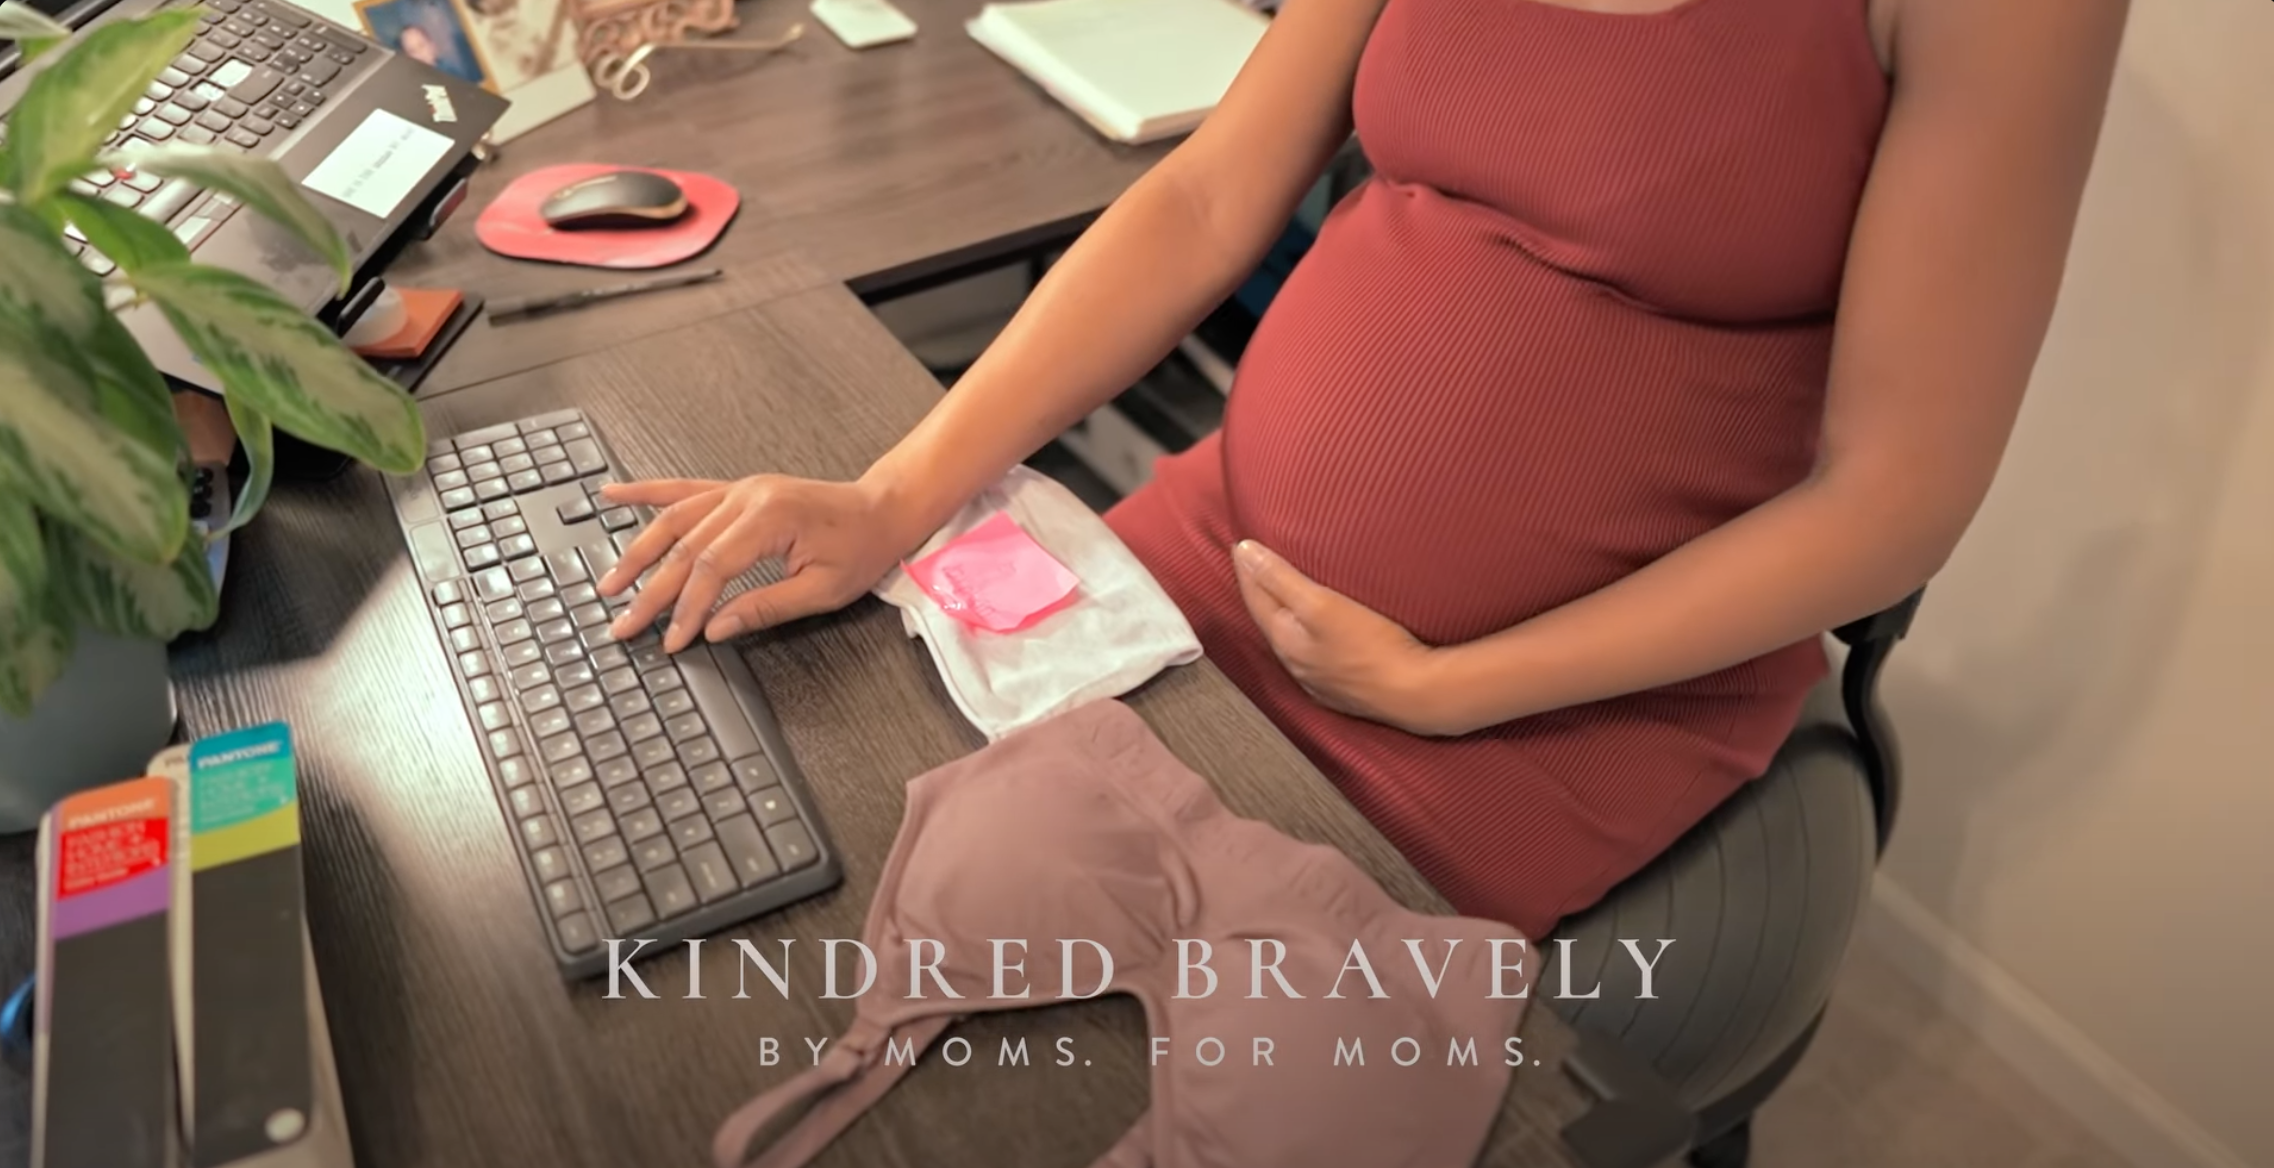 Load video: Kindred Bravely, By Moms. For Moms. 